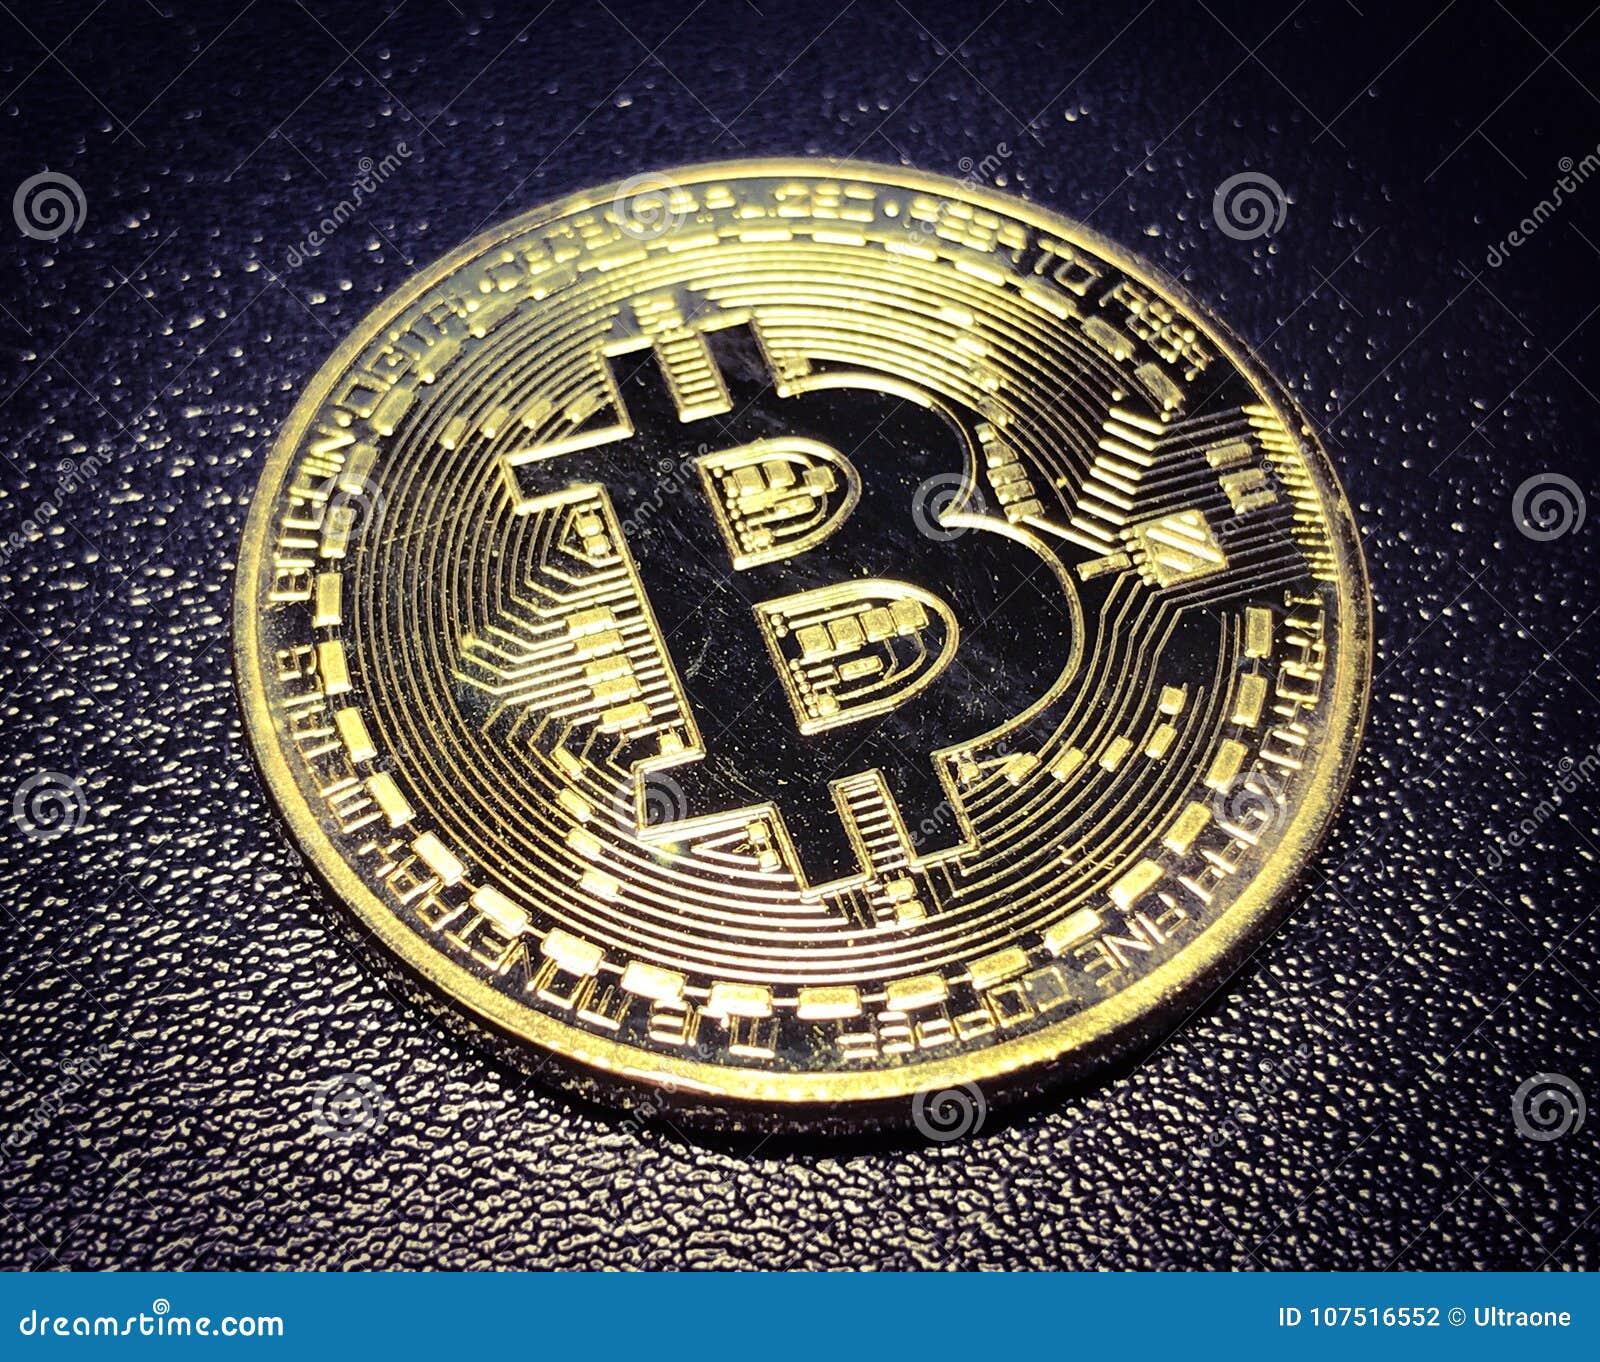 Bitcoin Coin stock photo. Image of sign, coin, blockchain - 107516552